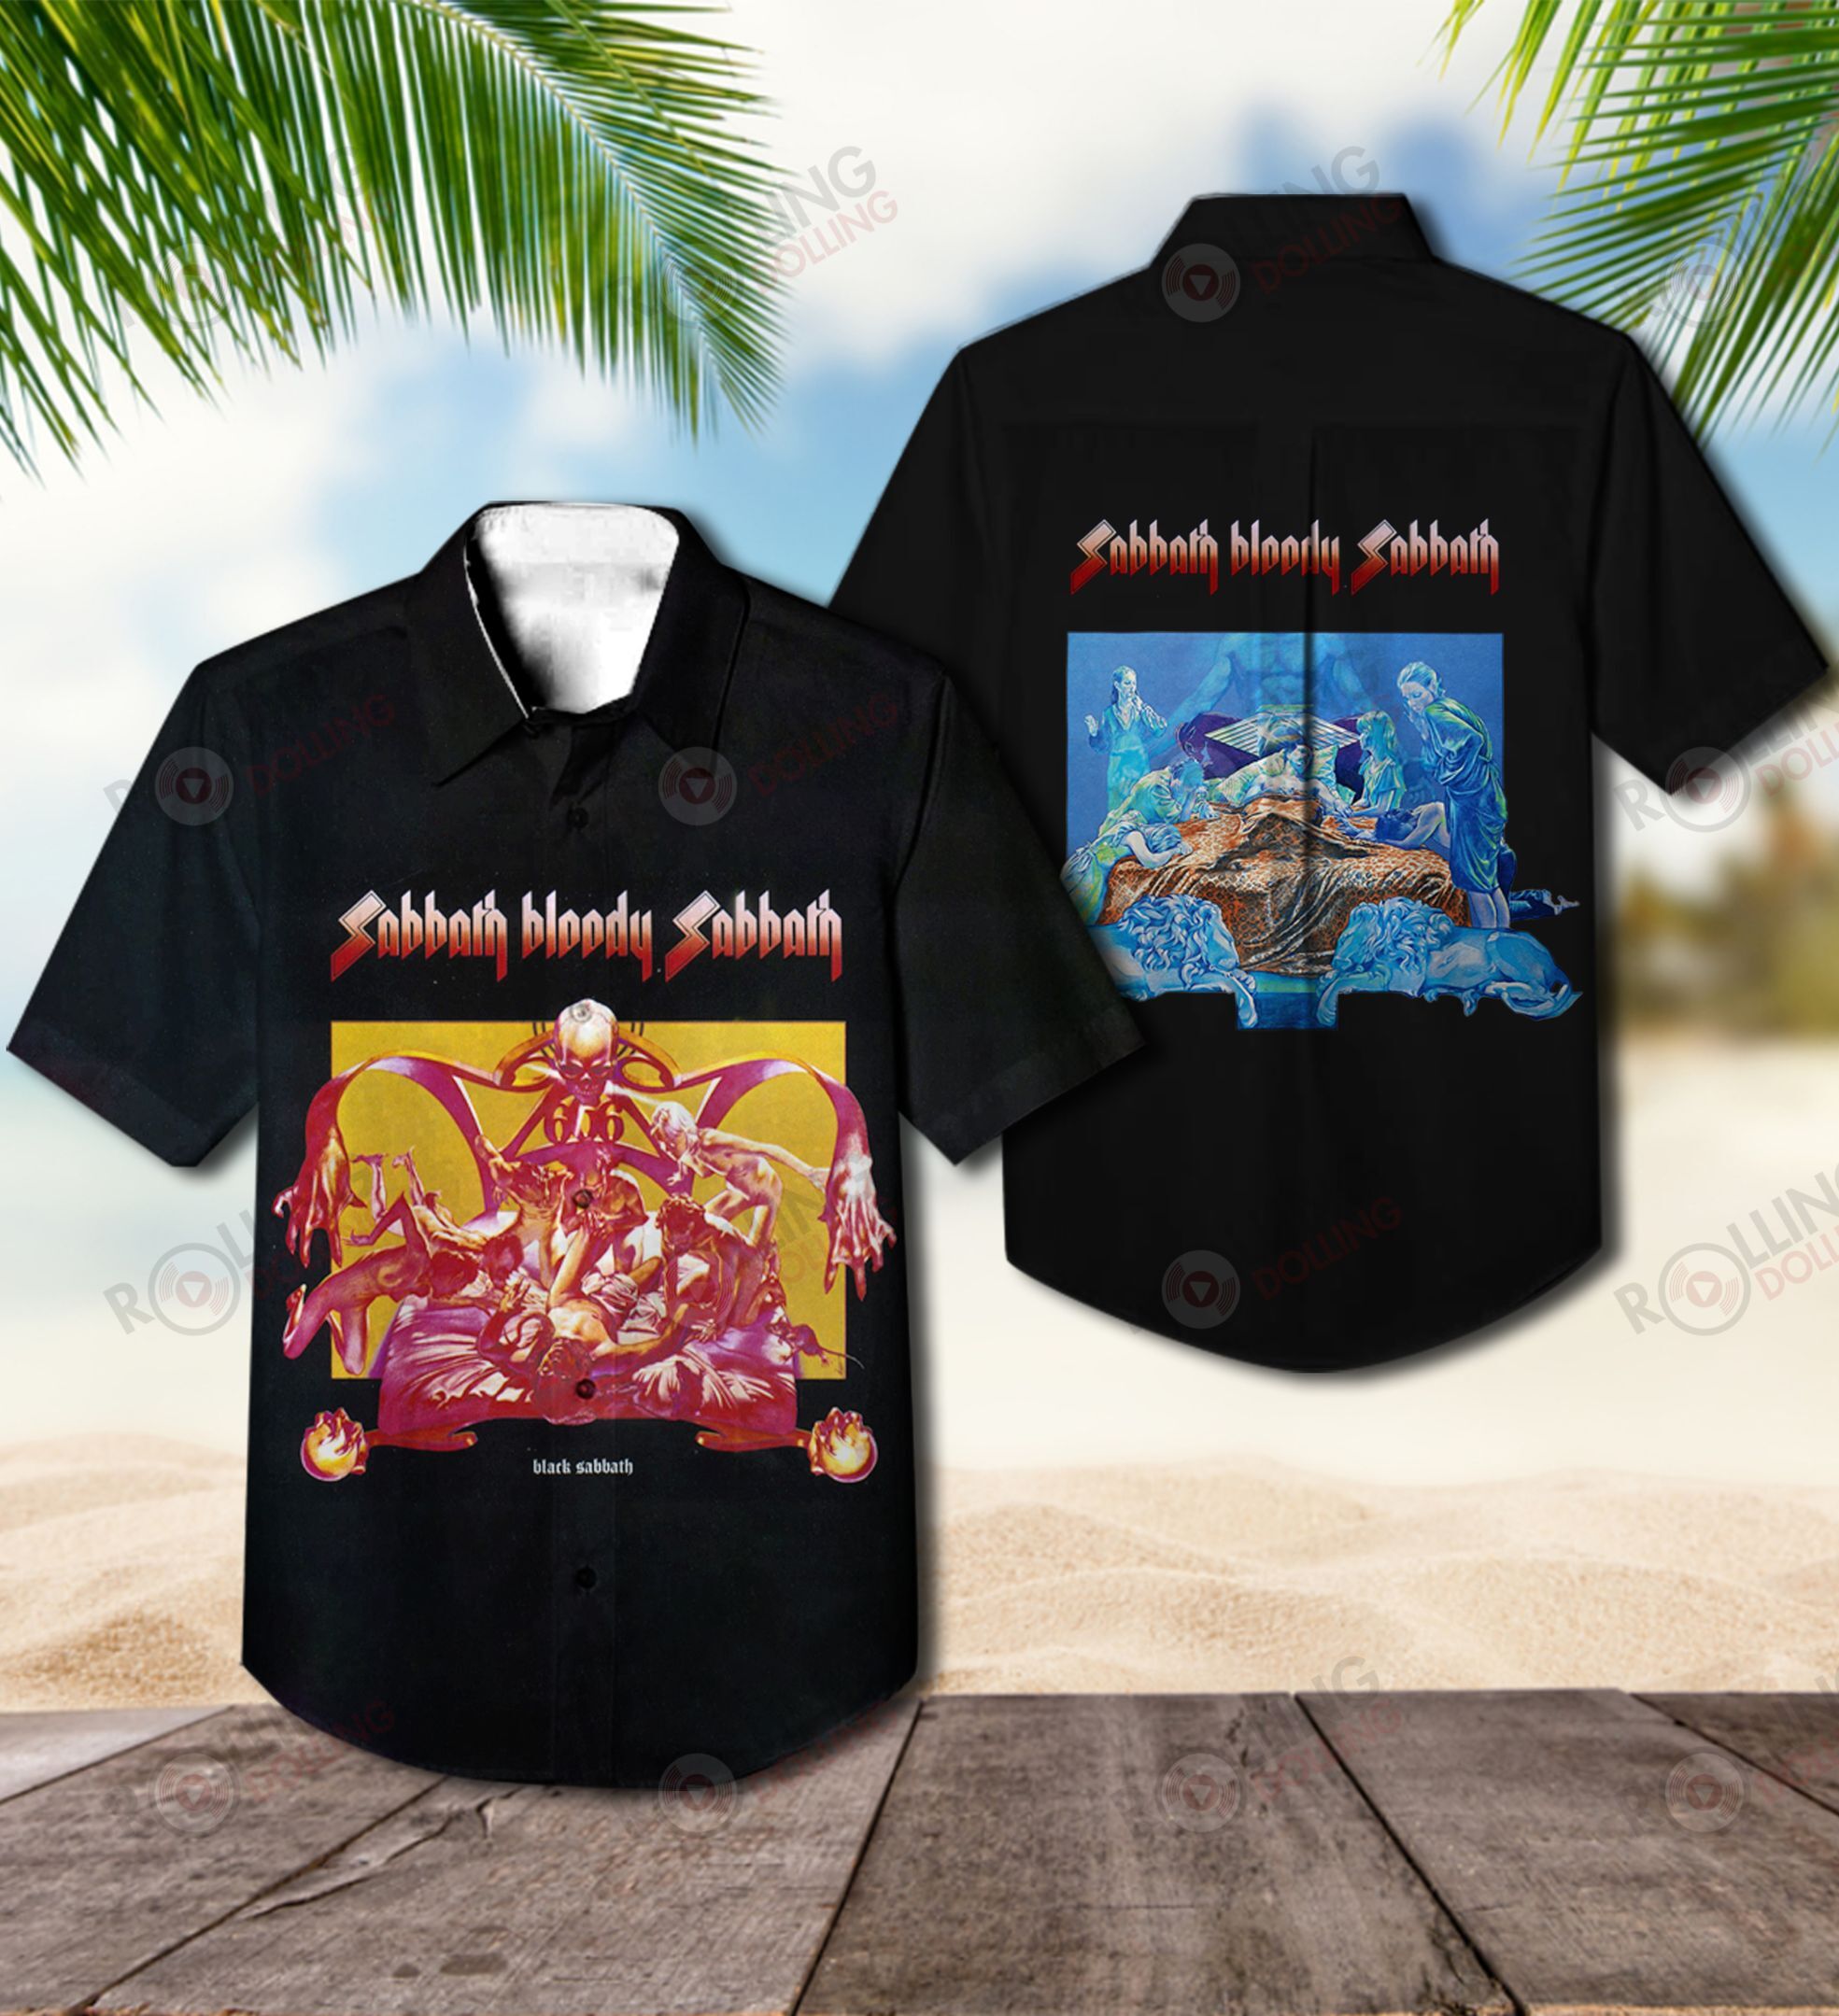 Regardless of their style, you will feel comfortable wearing Hawaiian Shirt 207